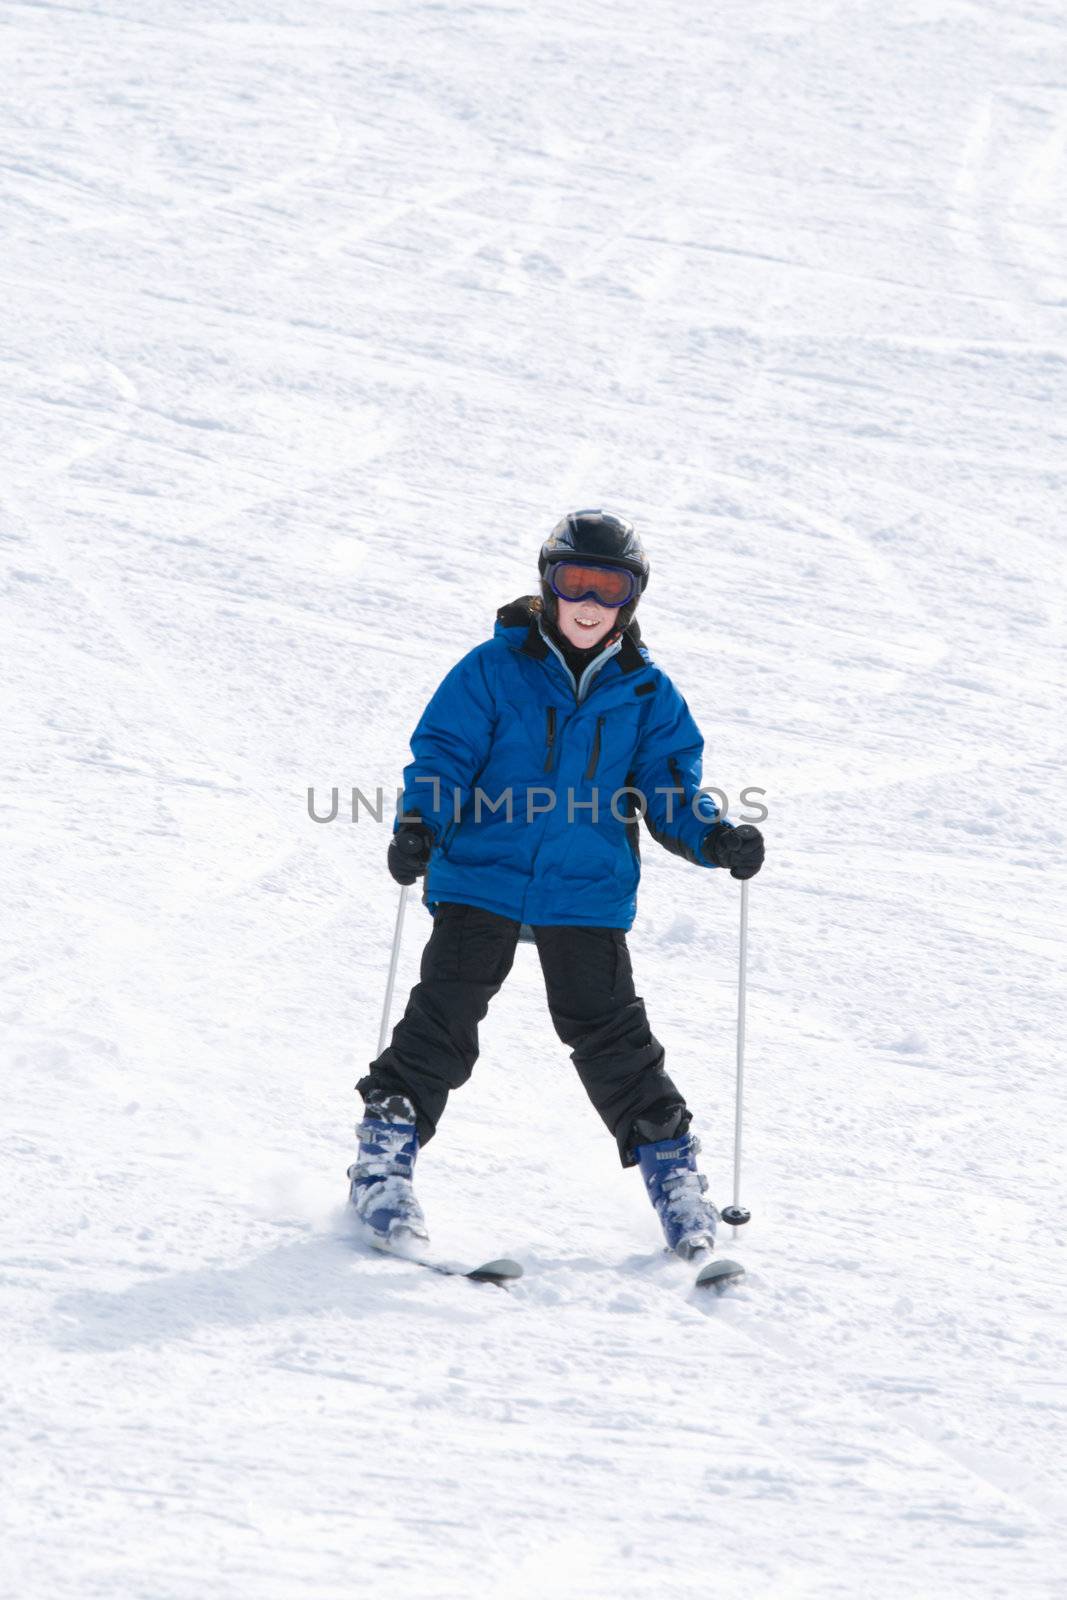 Smiling boy on skis at bottom of ski slope